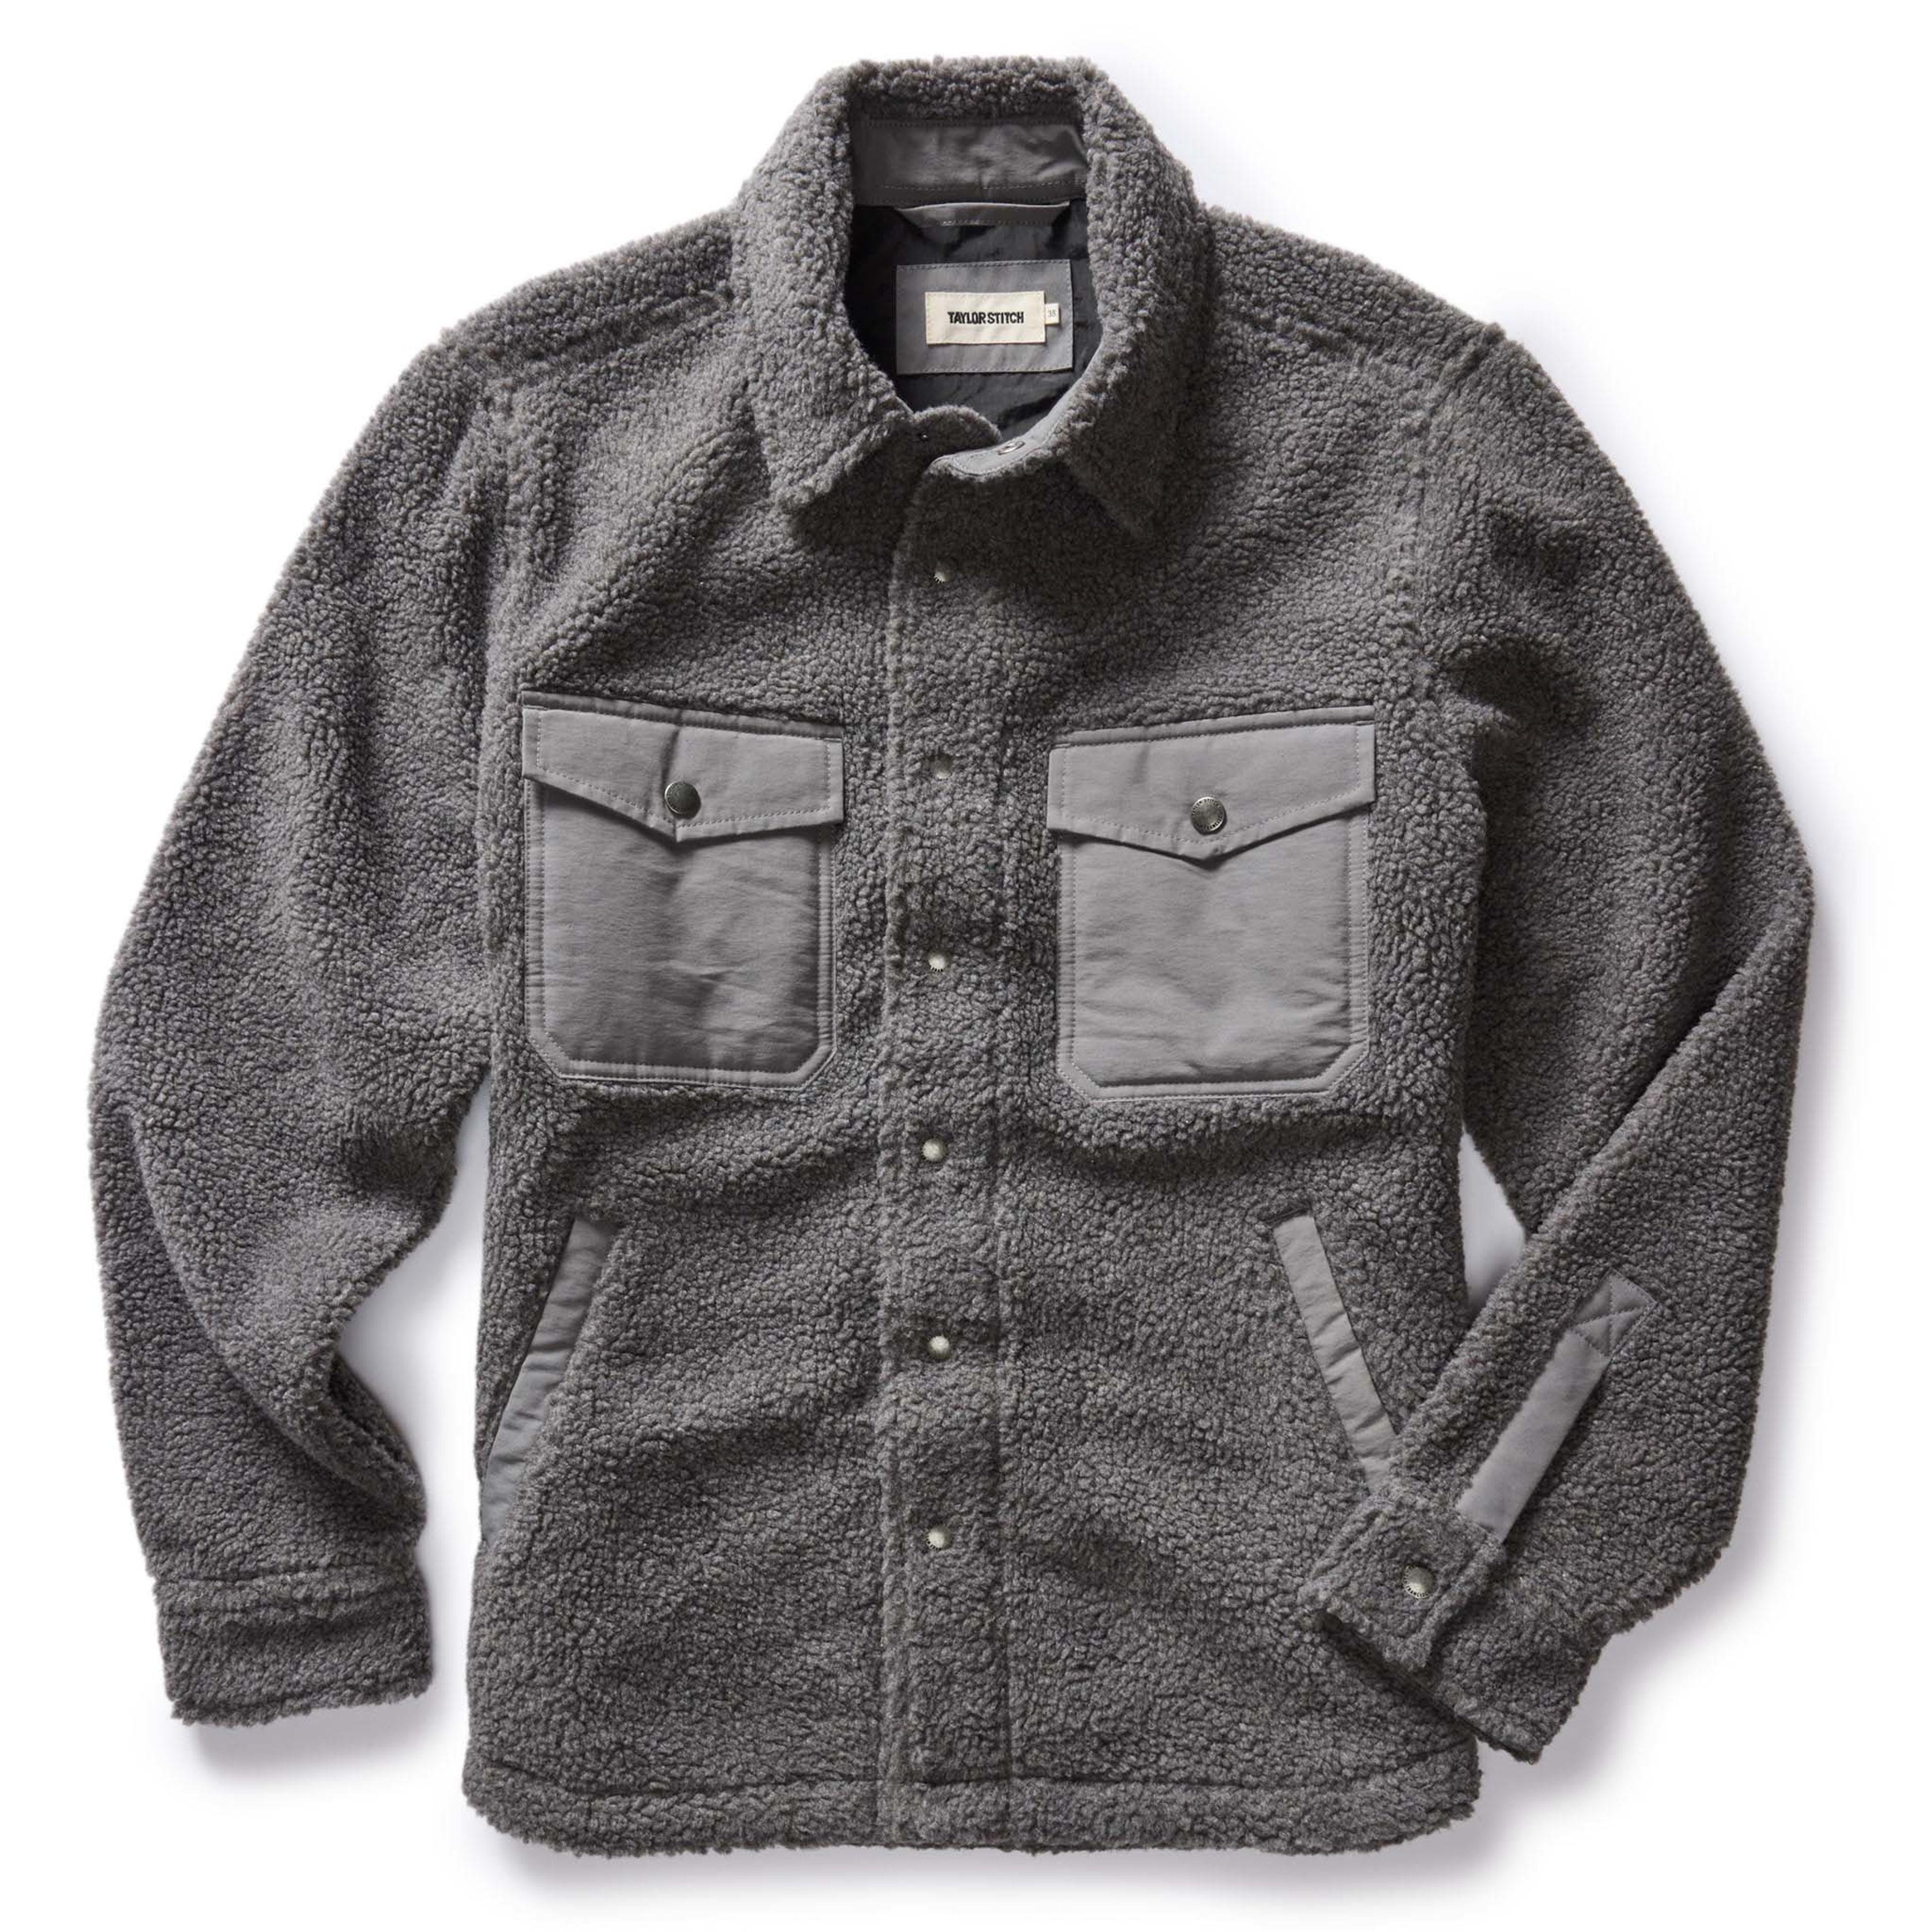 The Timberline Men's Fleece Jacket in Greystone | Taylor Stitch